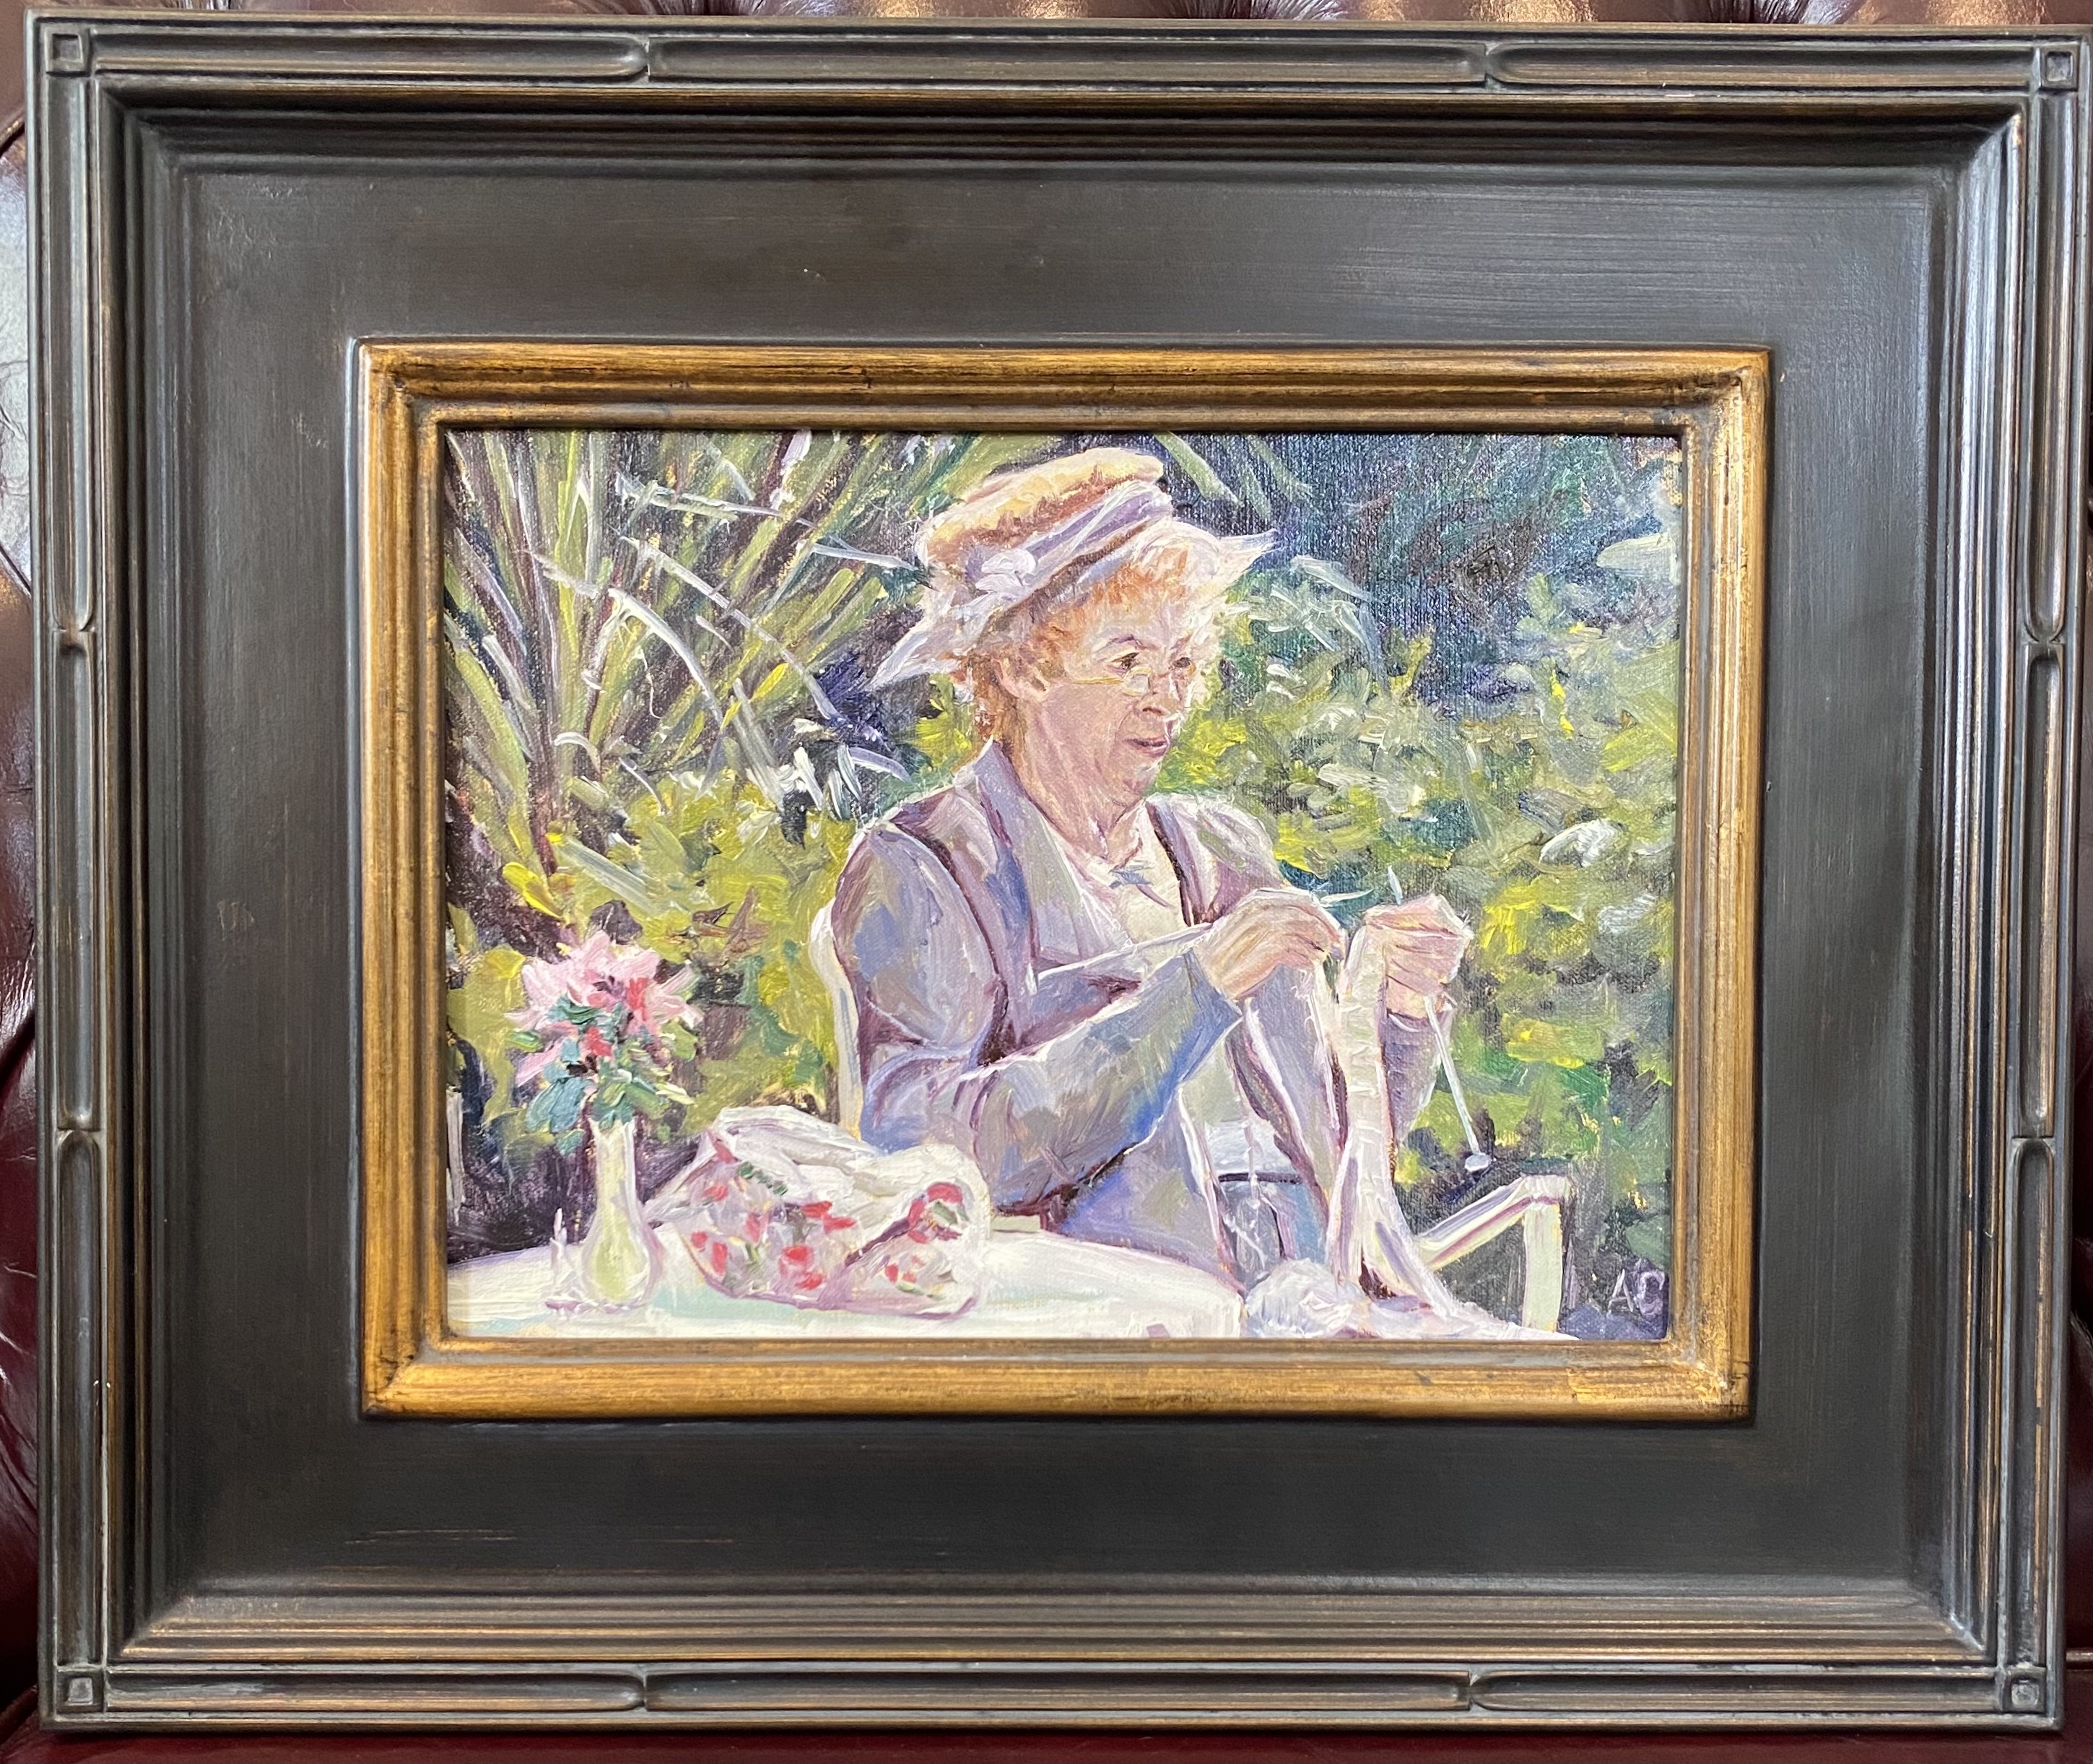 Miss Marple in her Garden
Oil	
9” X 12”
$275.
